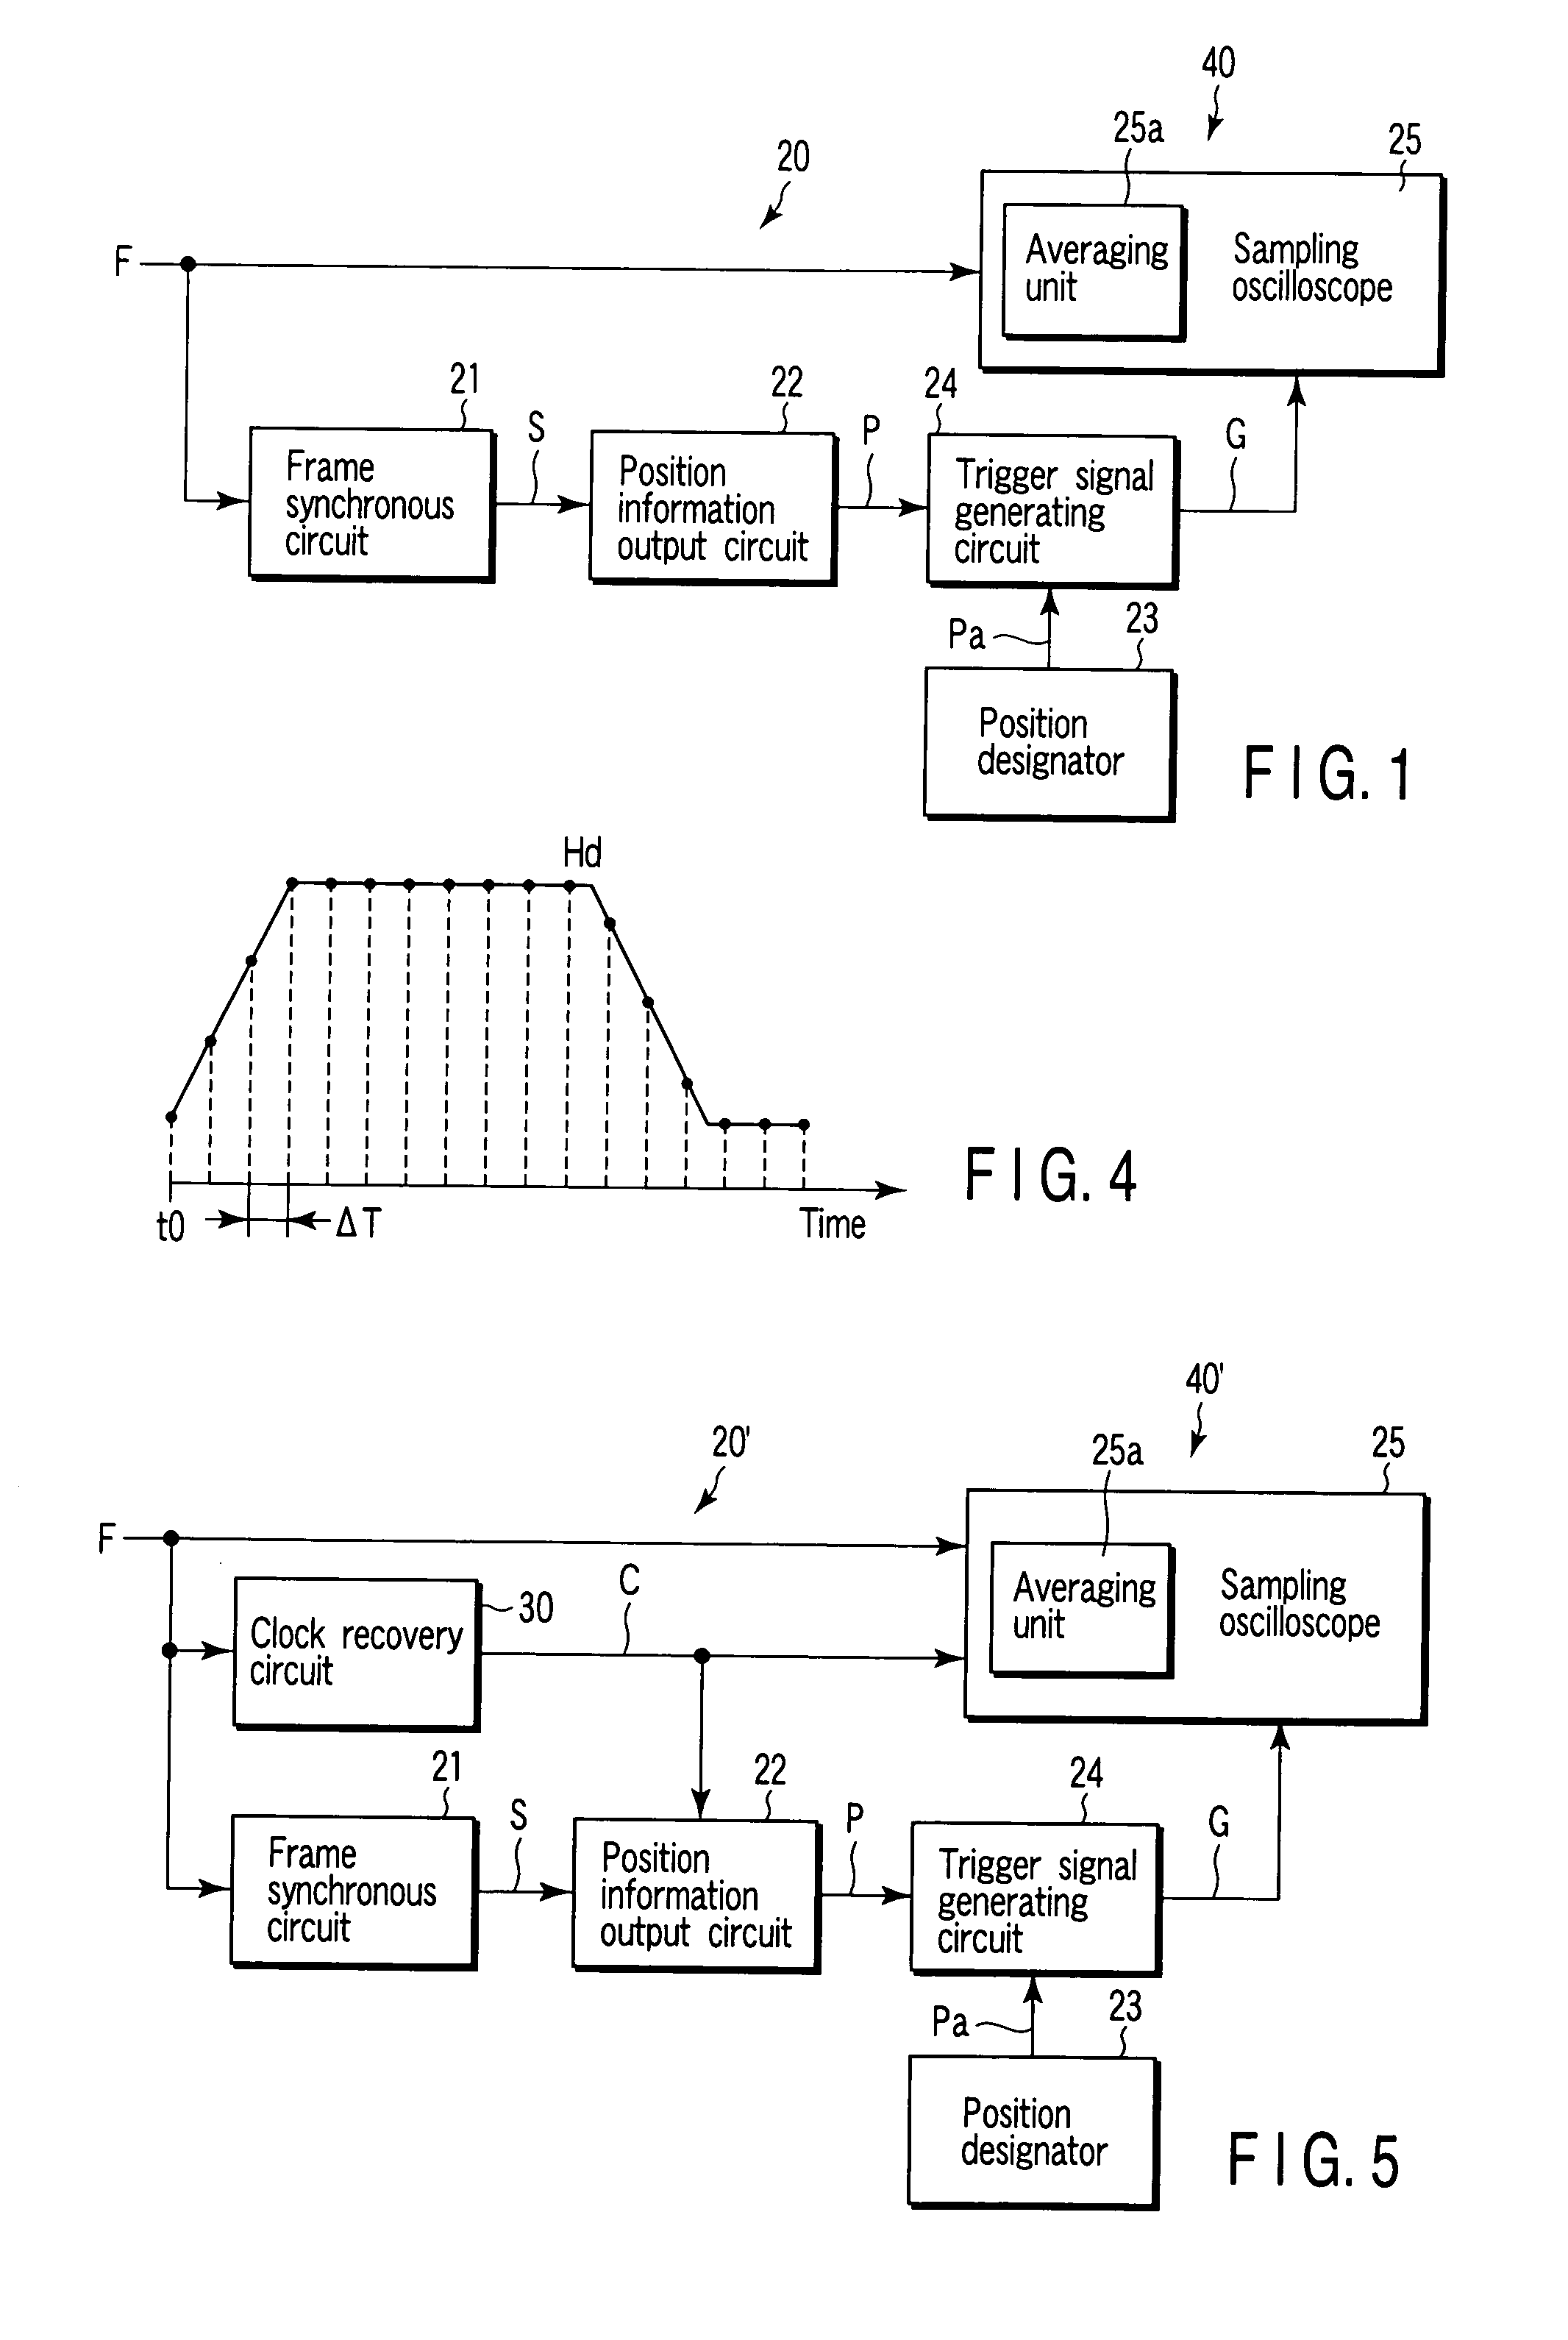 Frame signal waveform observation apparatus and method